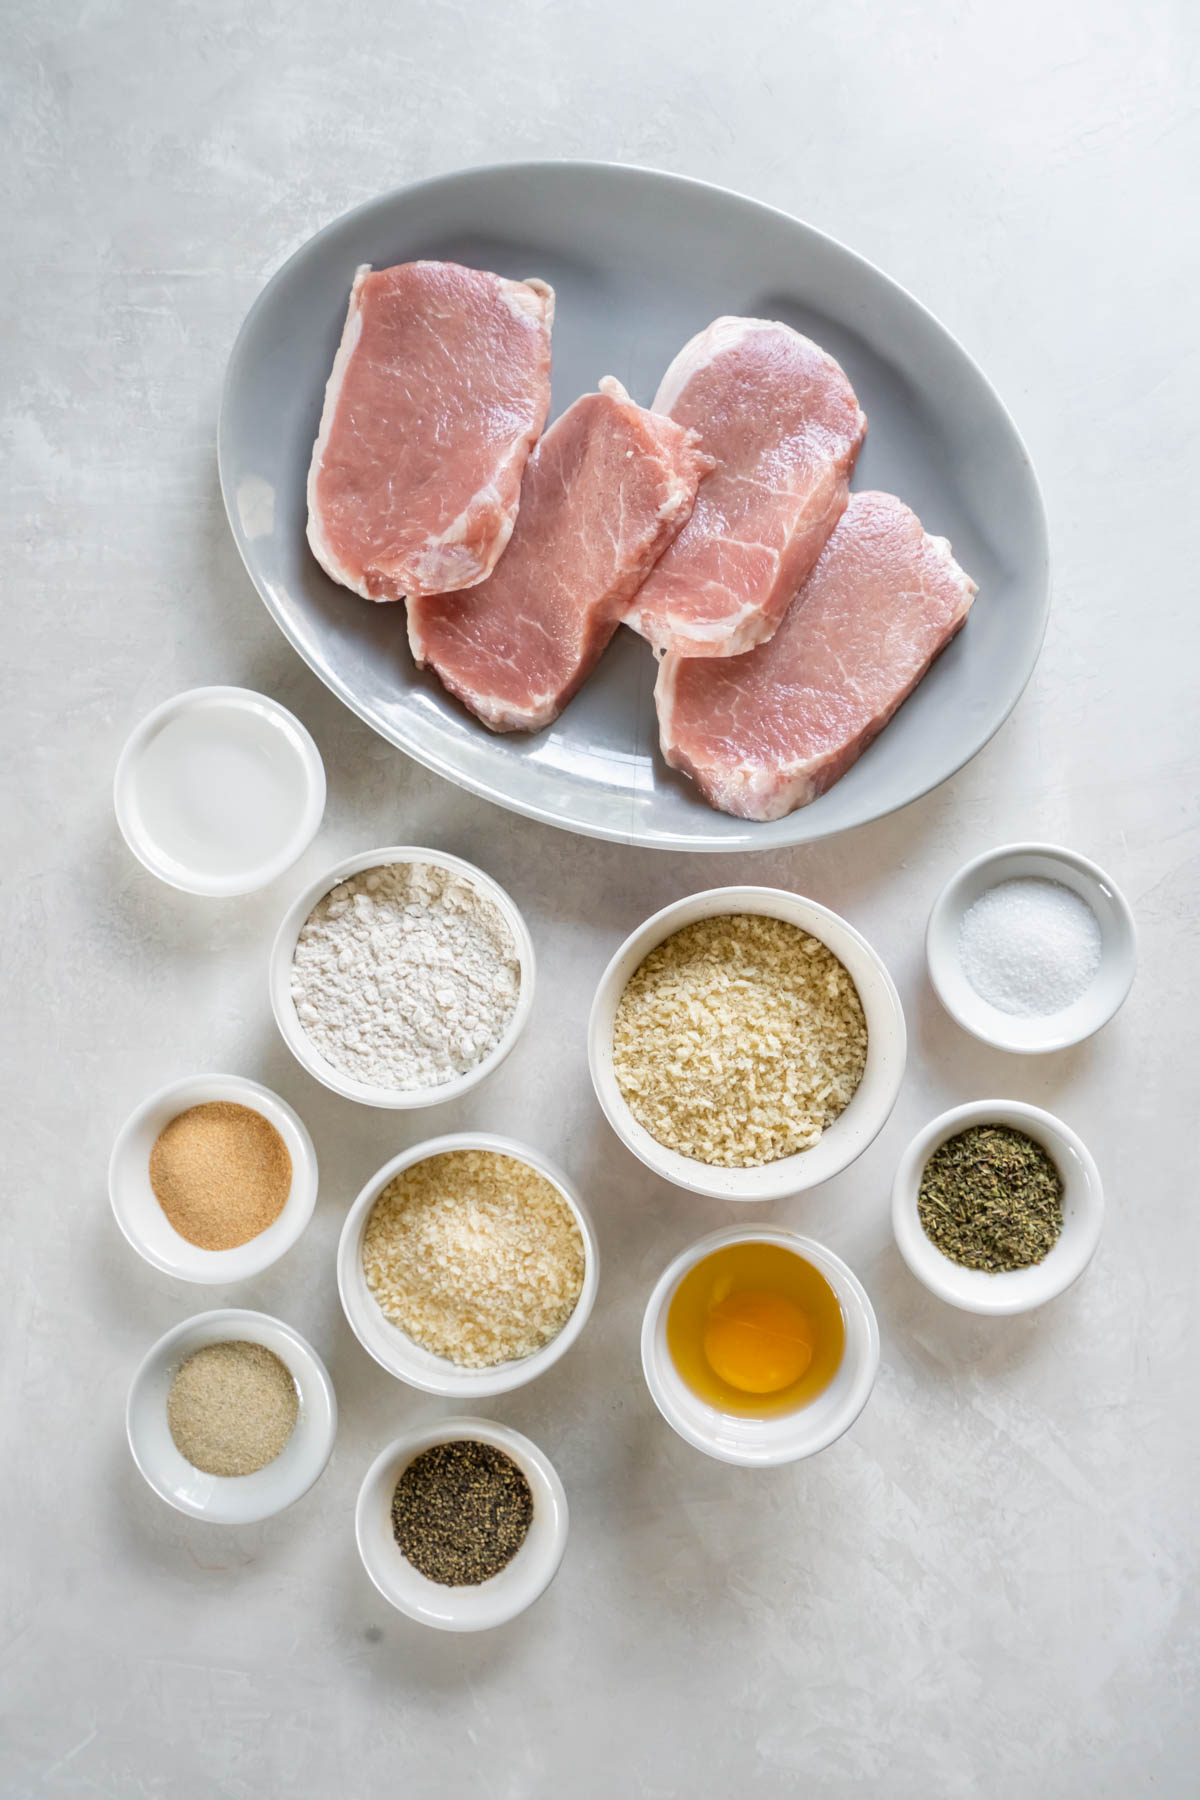 Ingredients for breaded pork chops recipe.